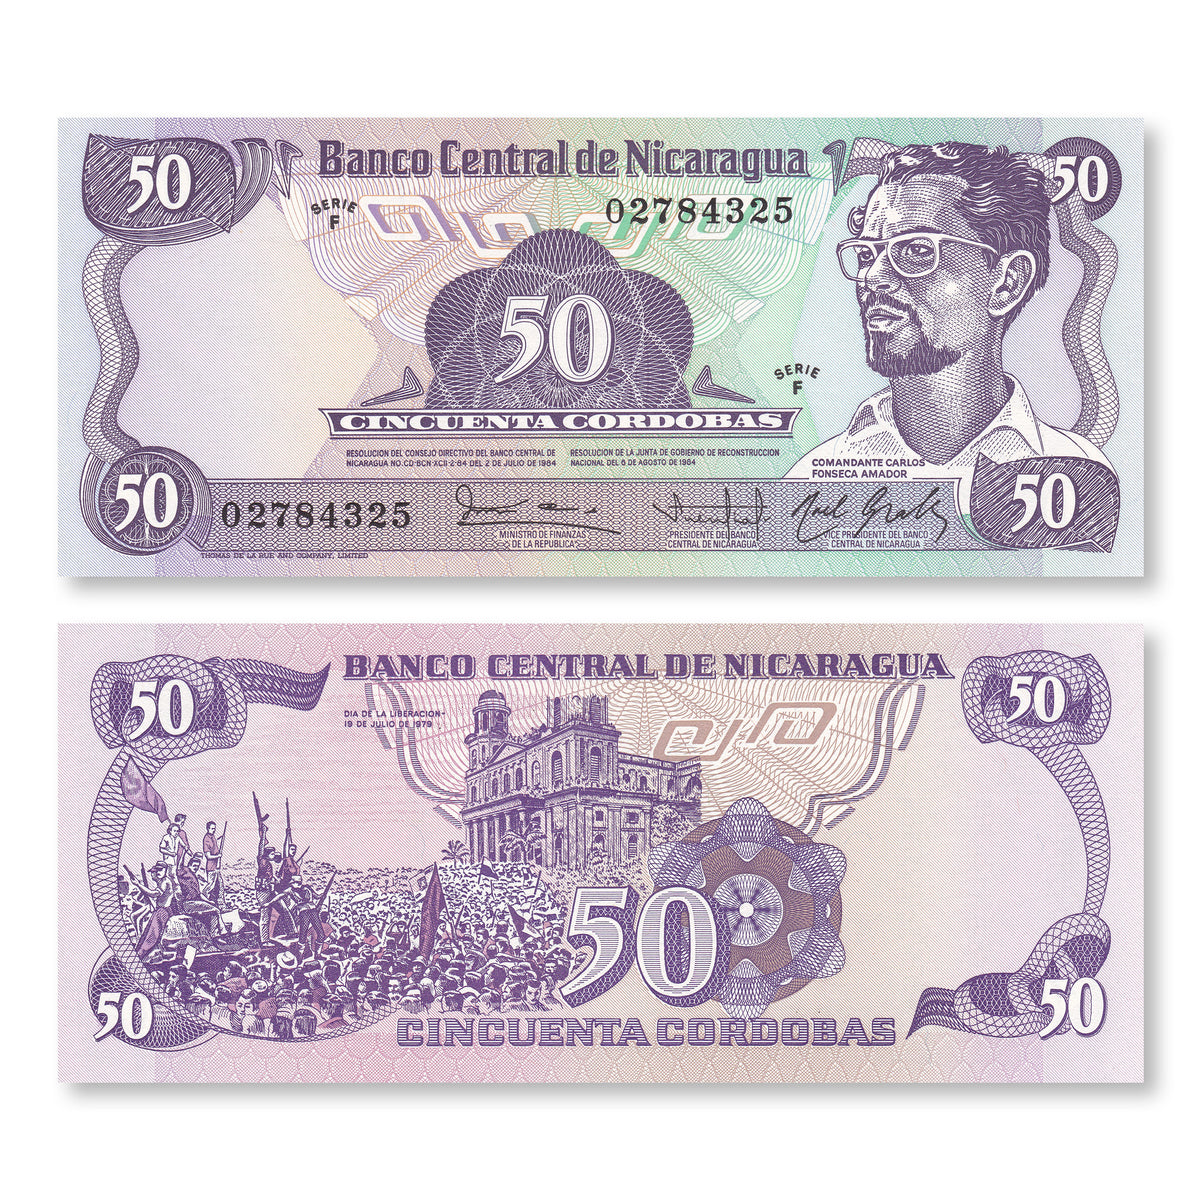 Nicaragua 50 Córdobas, 1984, B434a, P140, UNC - Robert's World Money - World Banknotes